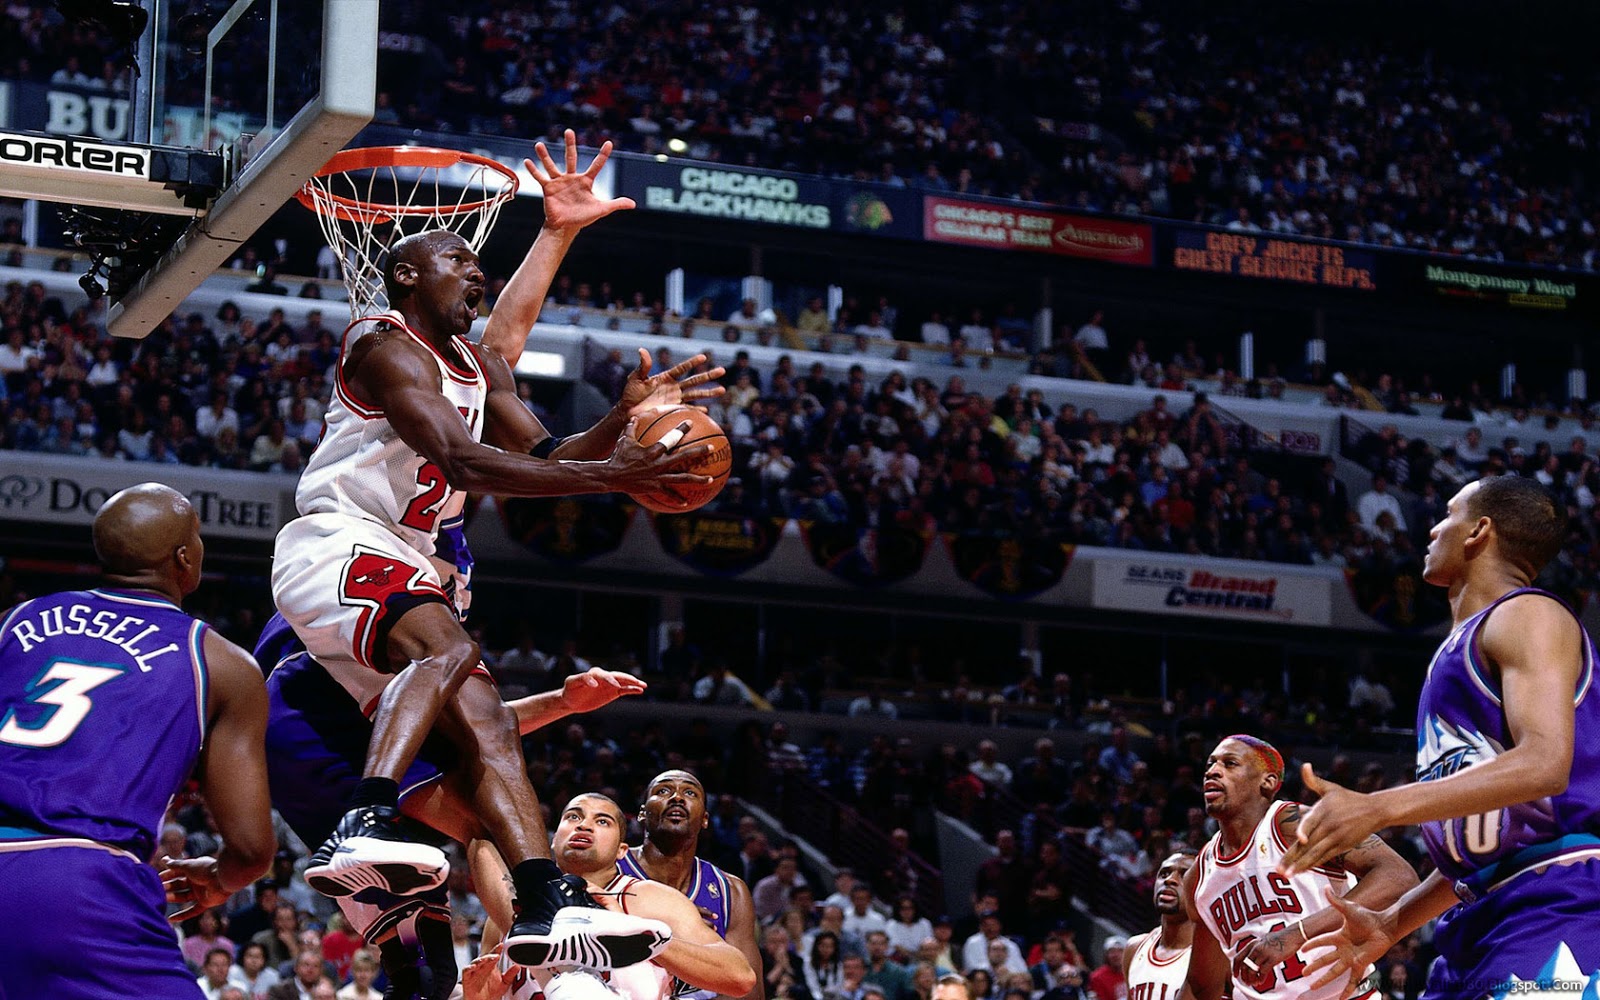 Jordan Basketball Are HD Desktop Wallpaper And Best Background